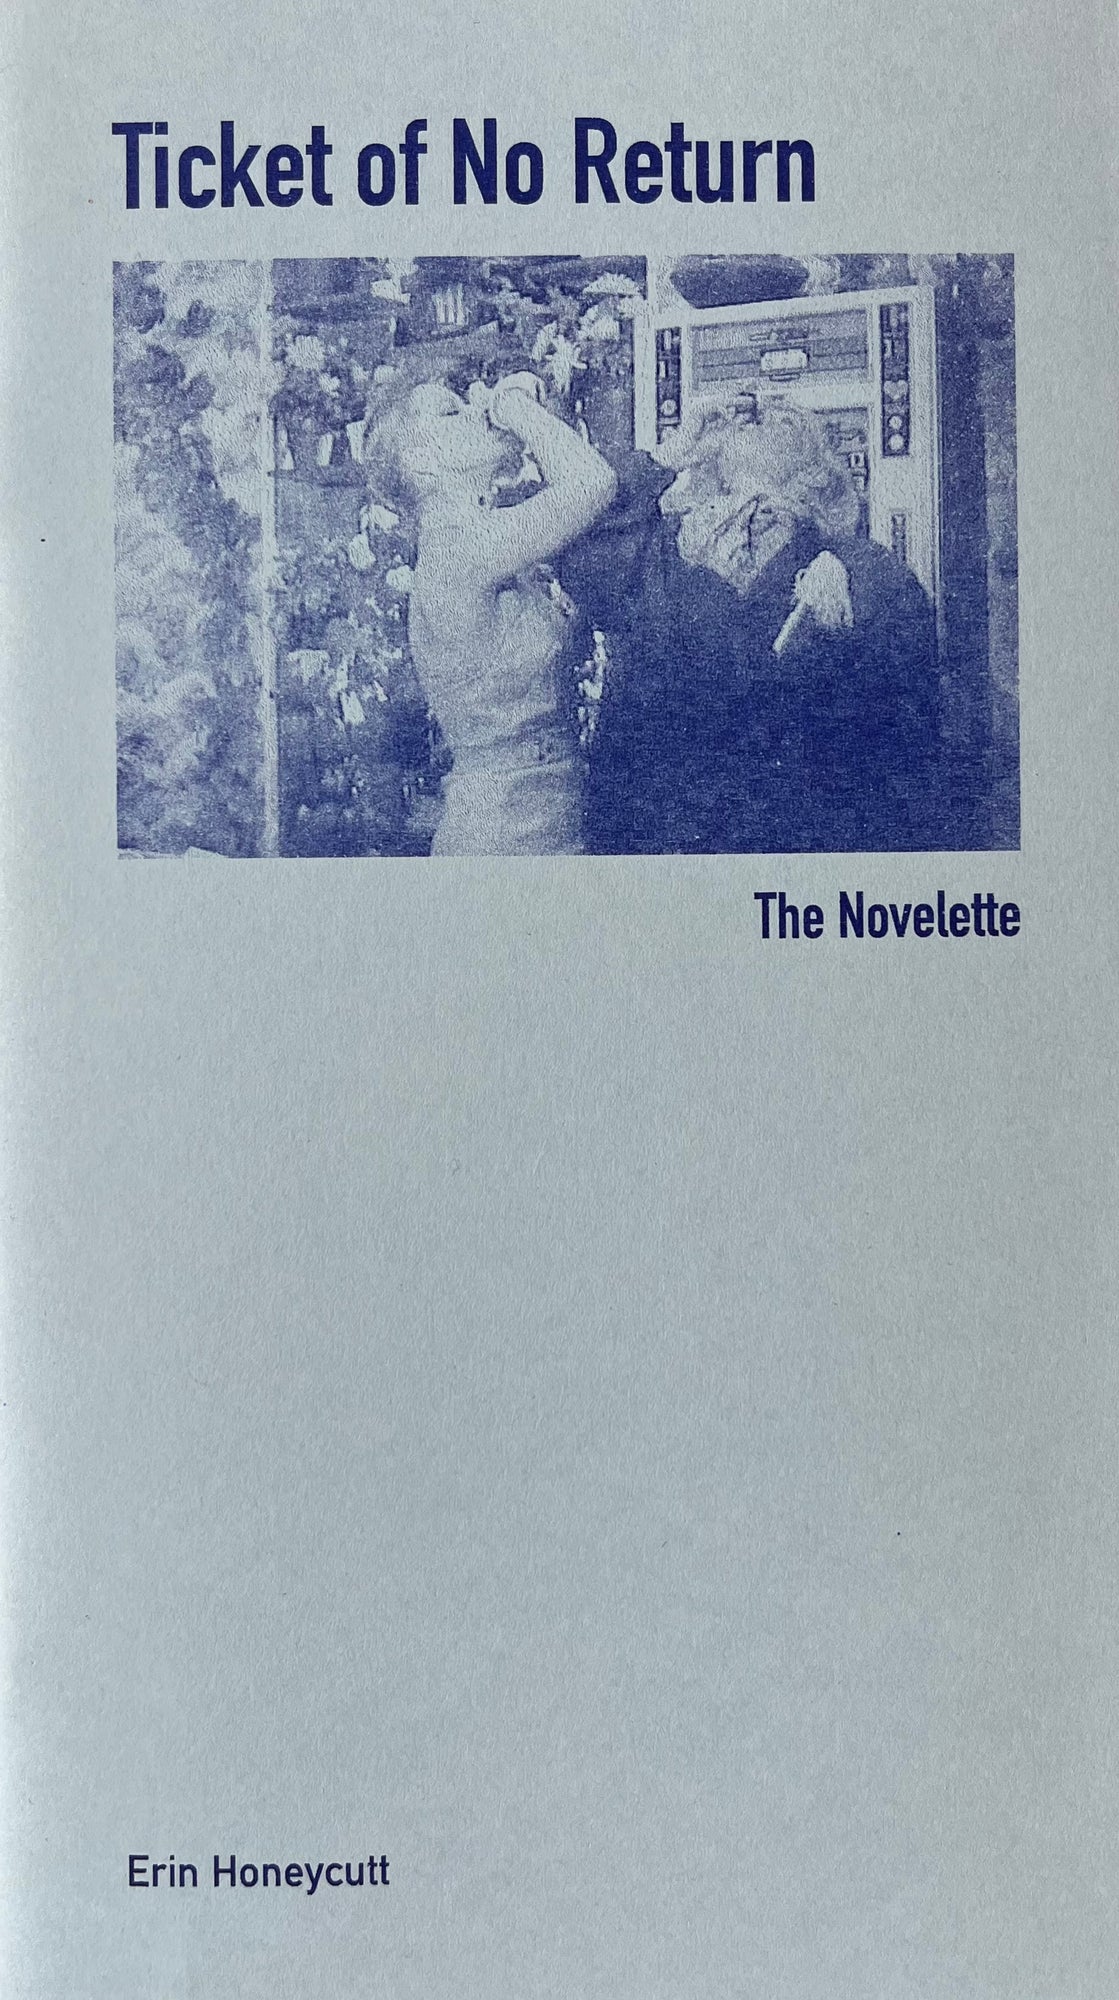 Ticket of No Return, The Novelette